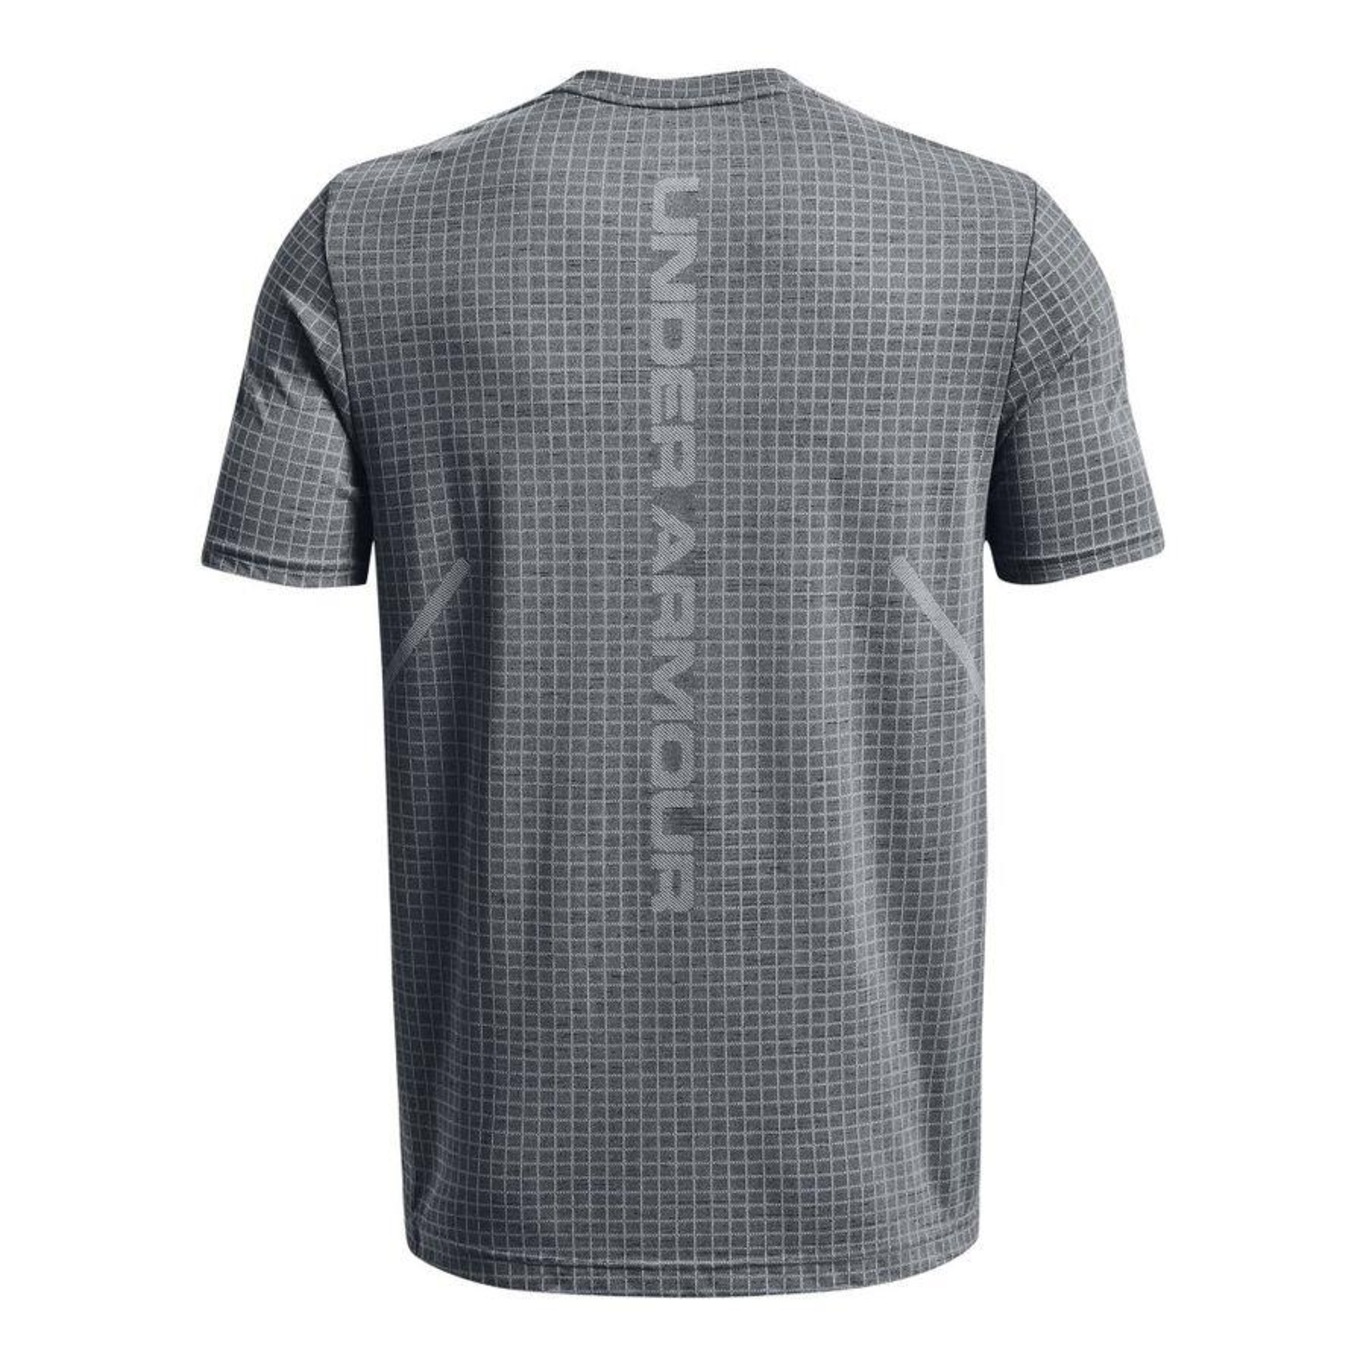 Camiseta Under Armour Seamless Grid Masculina - Preta - Bayard Esportes